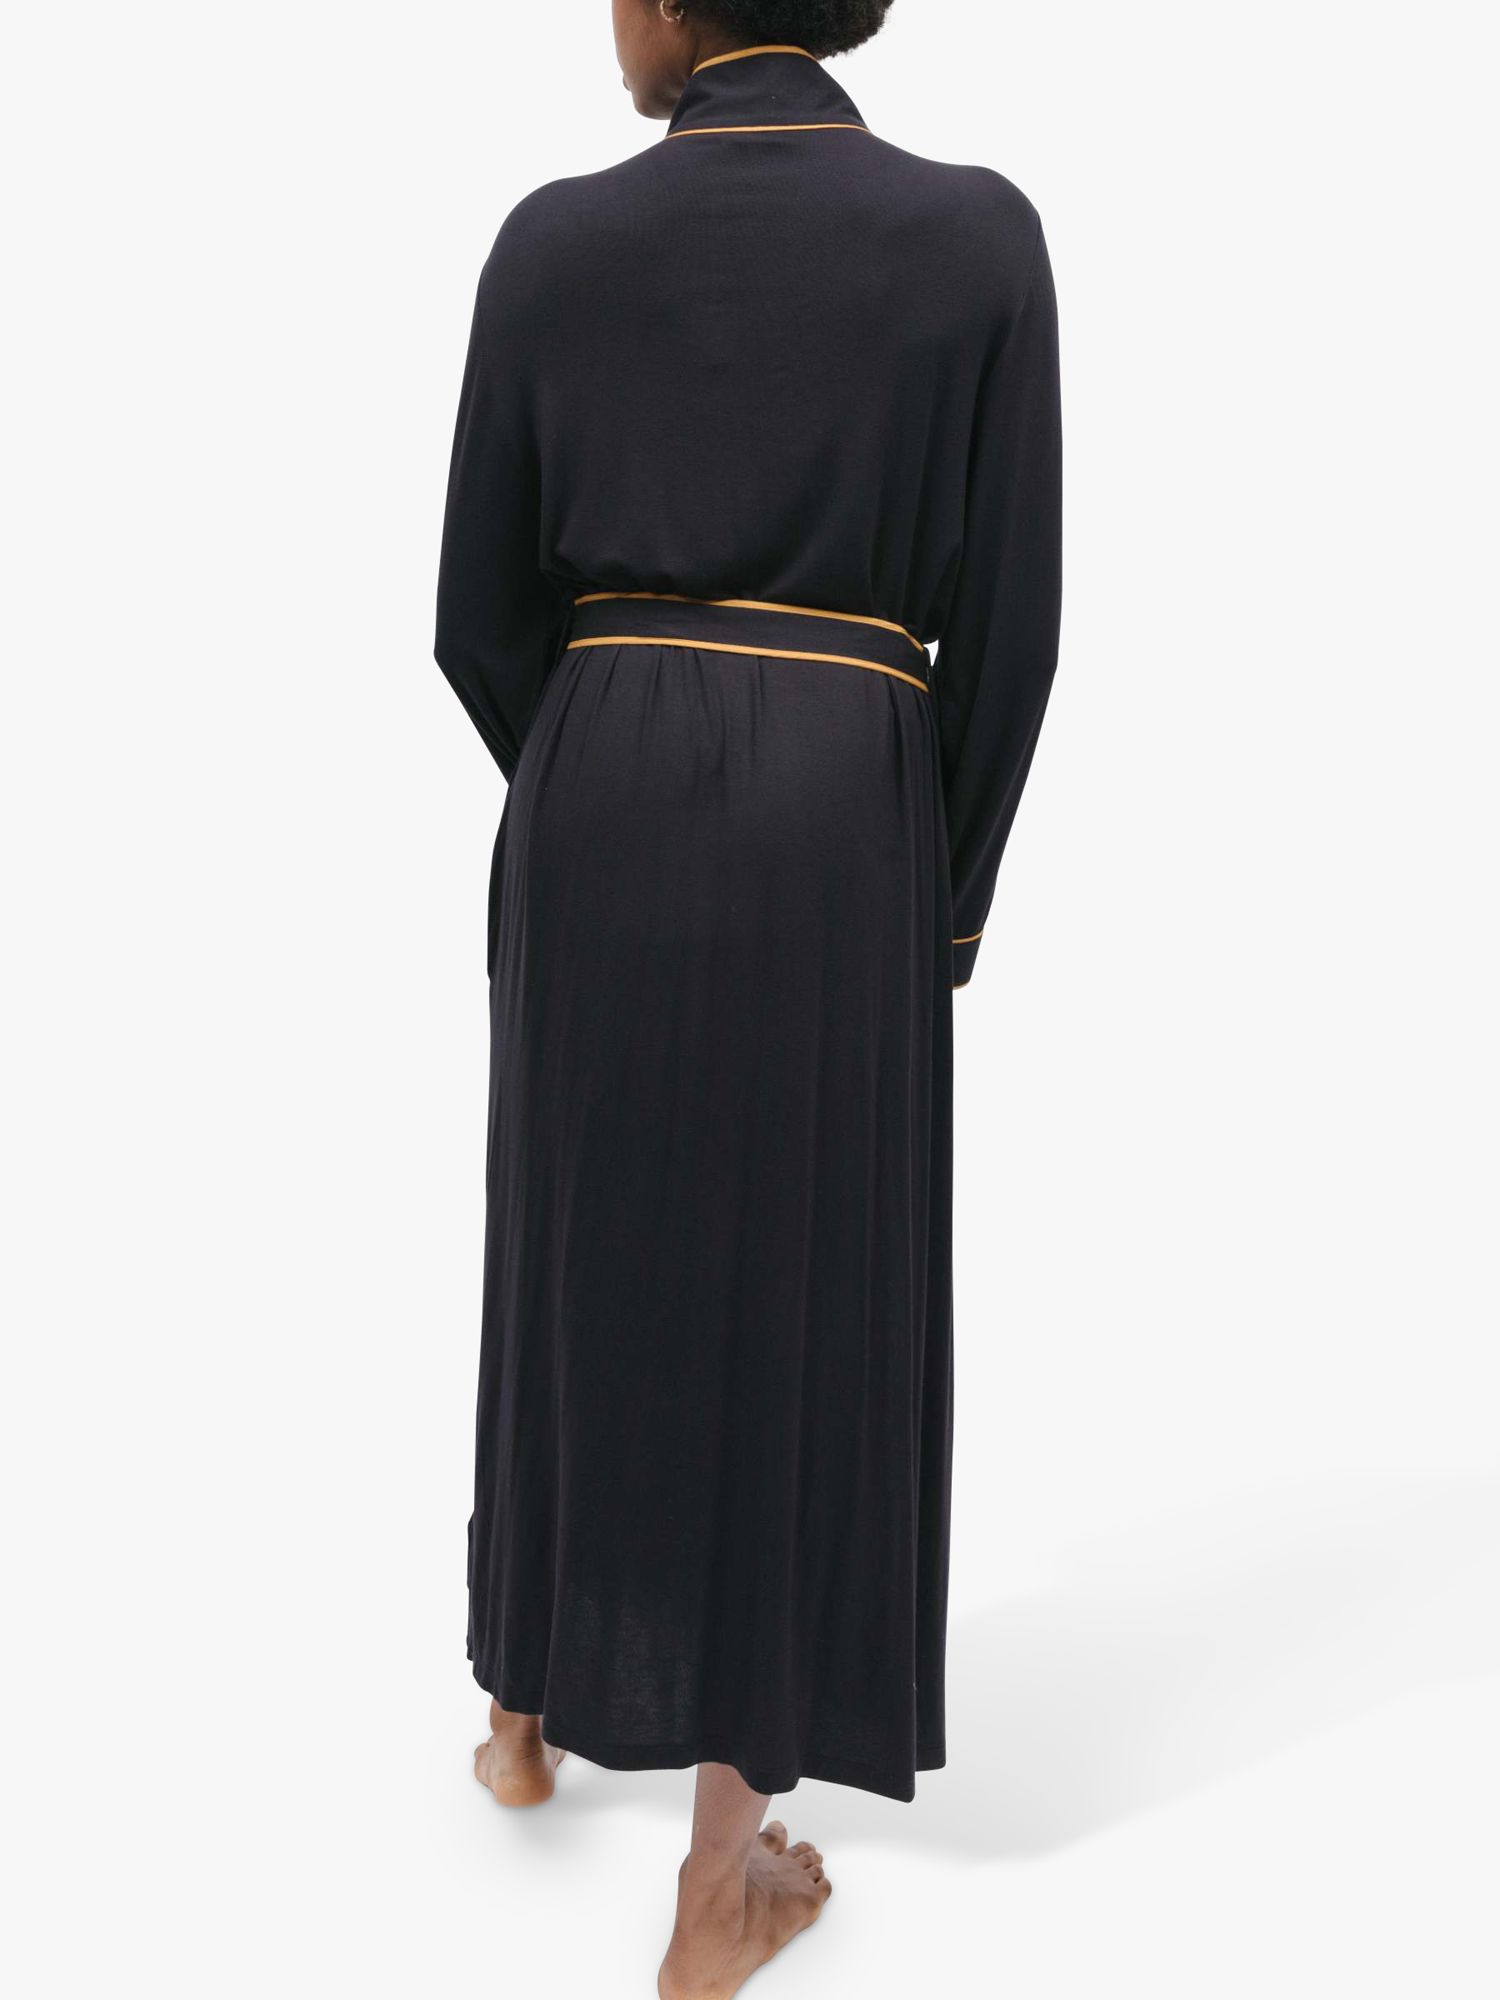 Buy Fable & Eve Brixton Colour Block Dressing Gown, Black Online at johnlewis.com